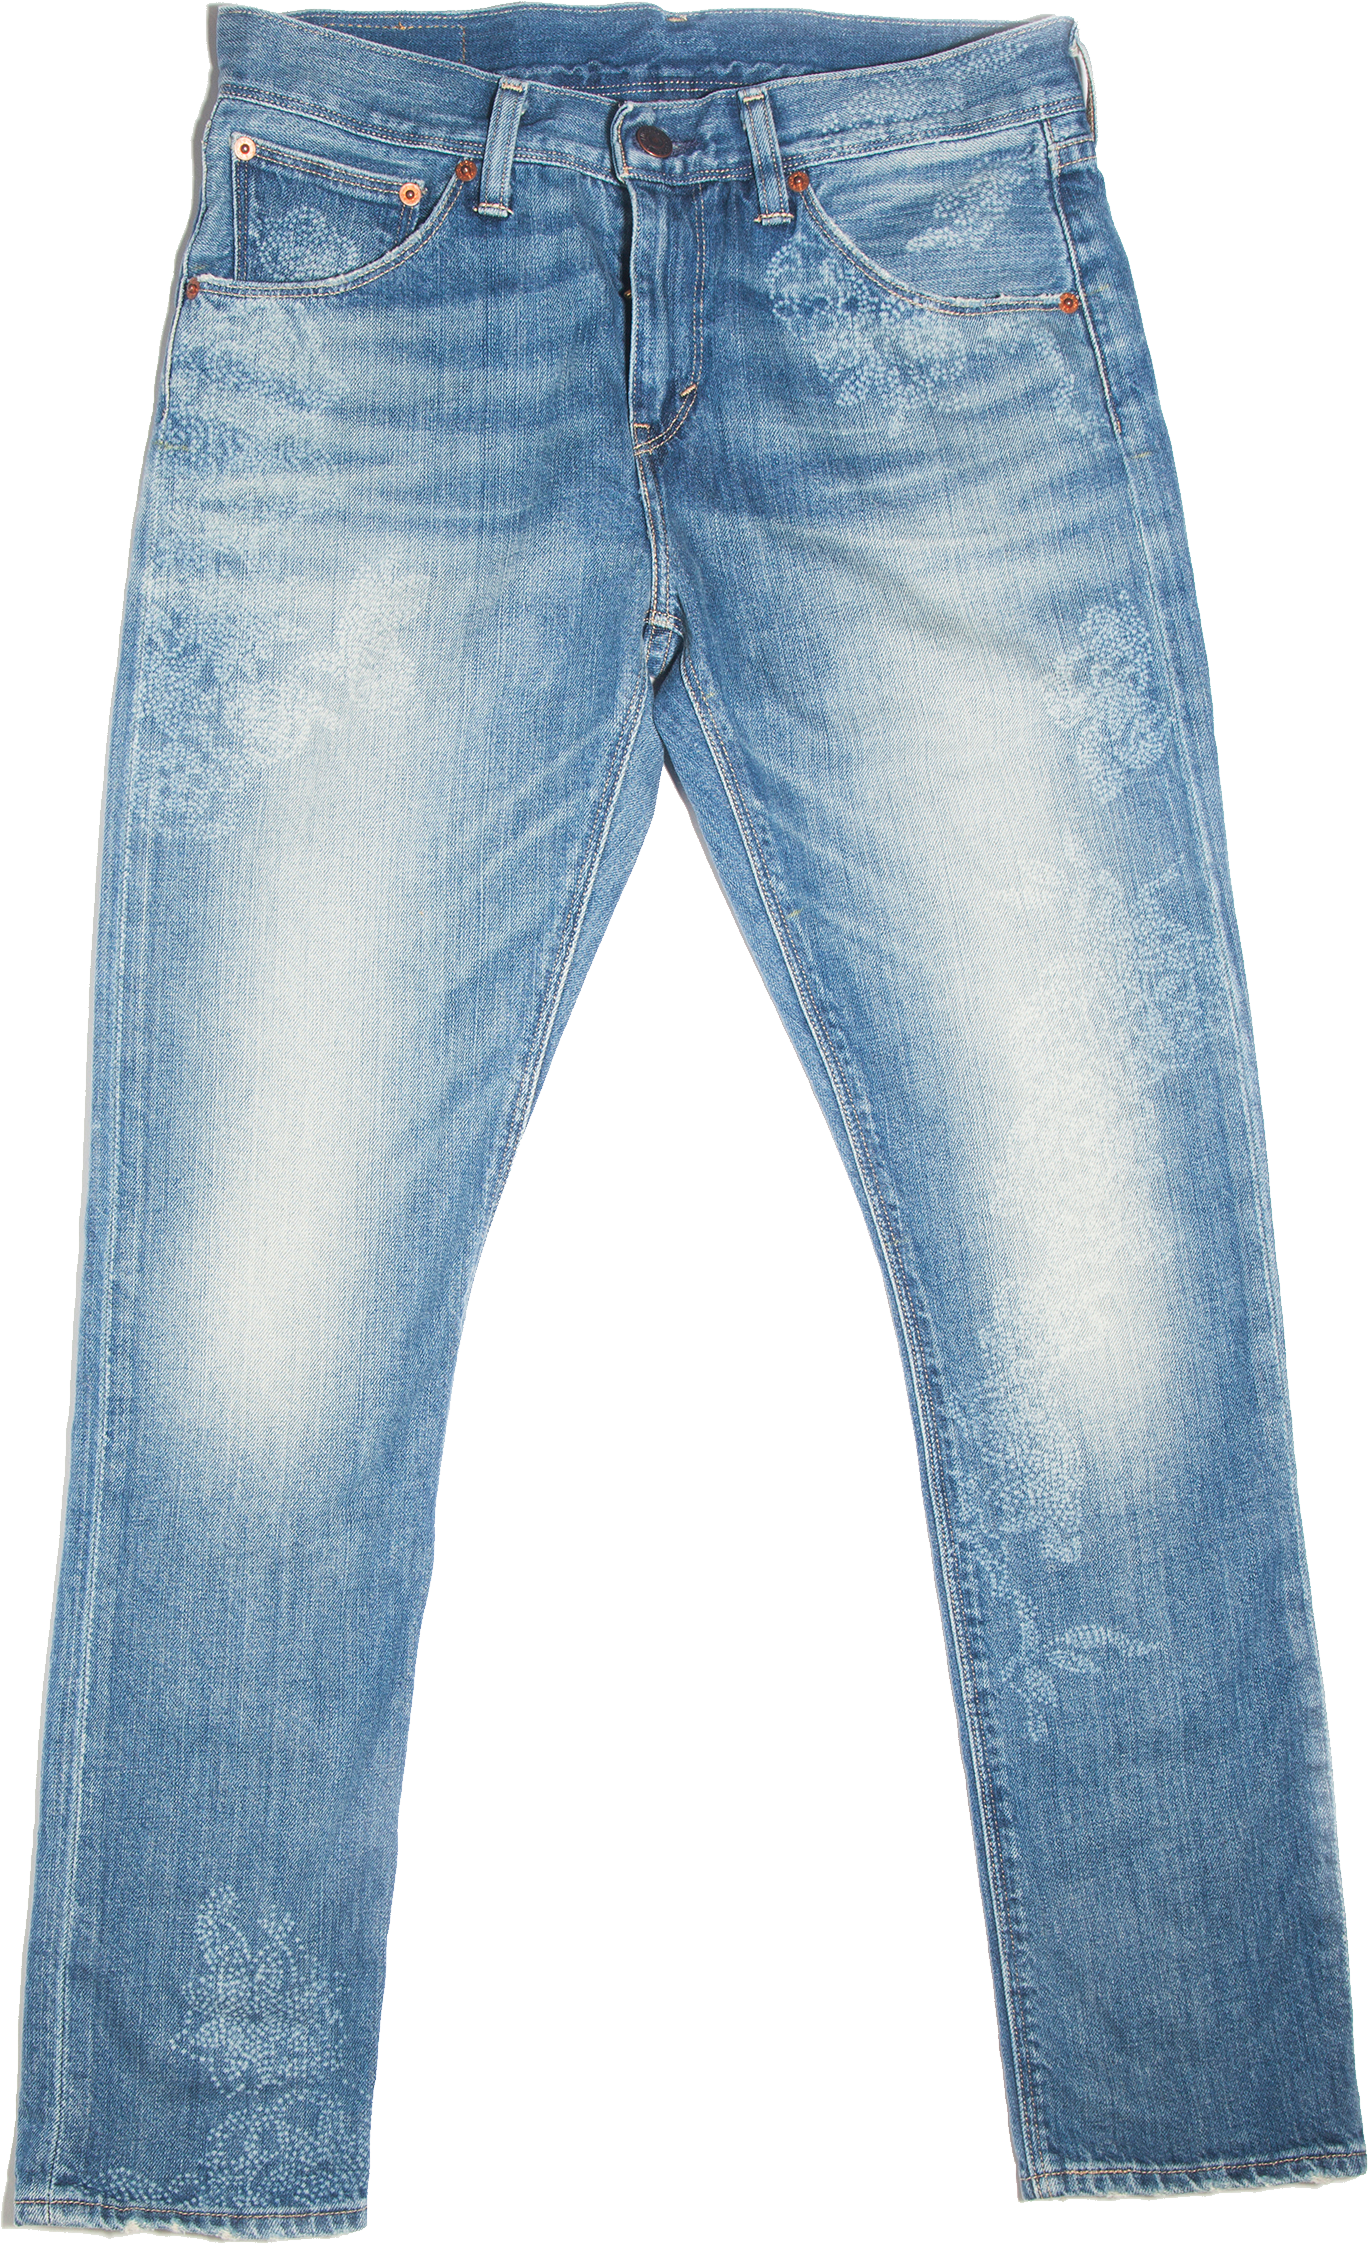 Jeans transparent pencil and. Underwear clipart blue